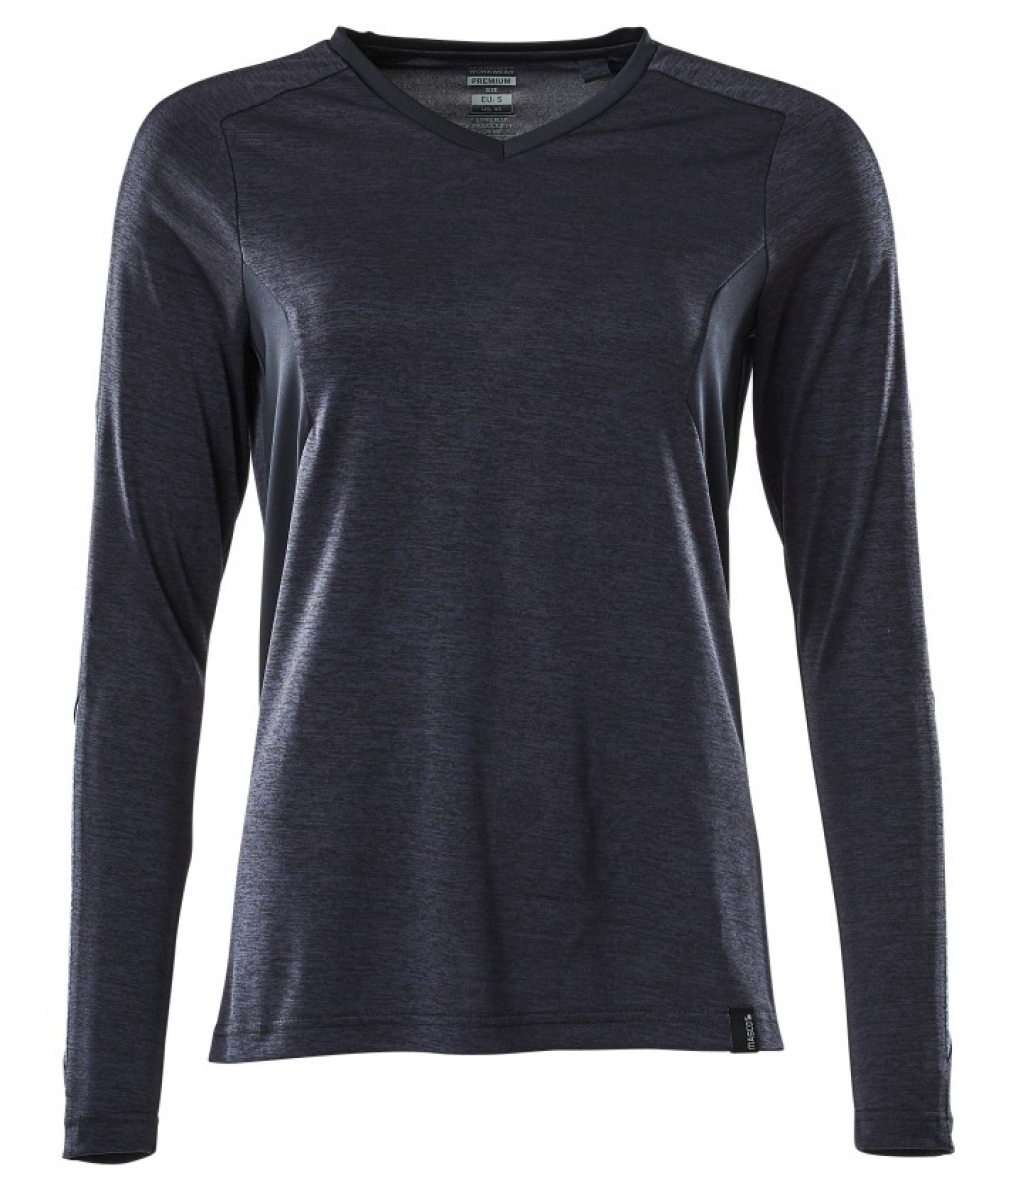 MASCOT-Worker-Shirts, Damen-T-Shirt, langarm, 230 g/m, schwarzblau